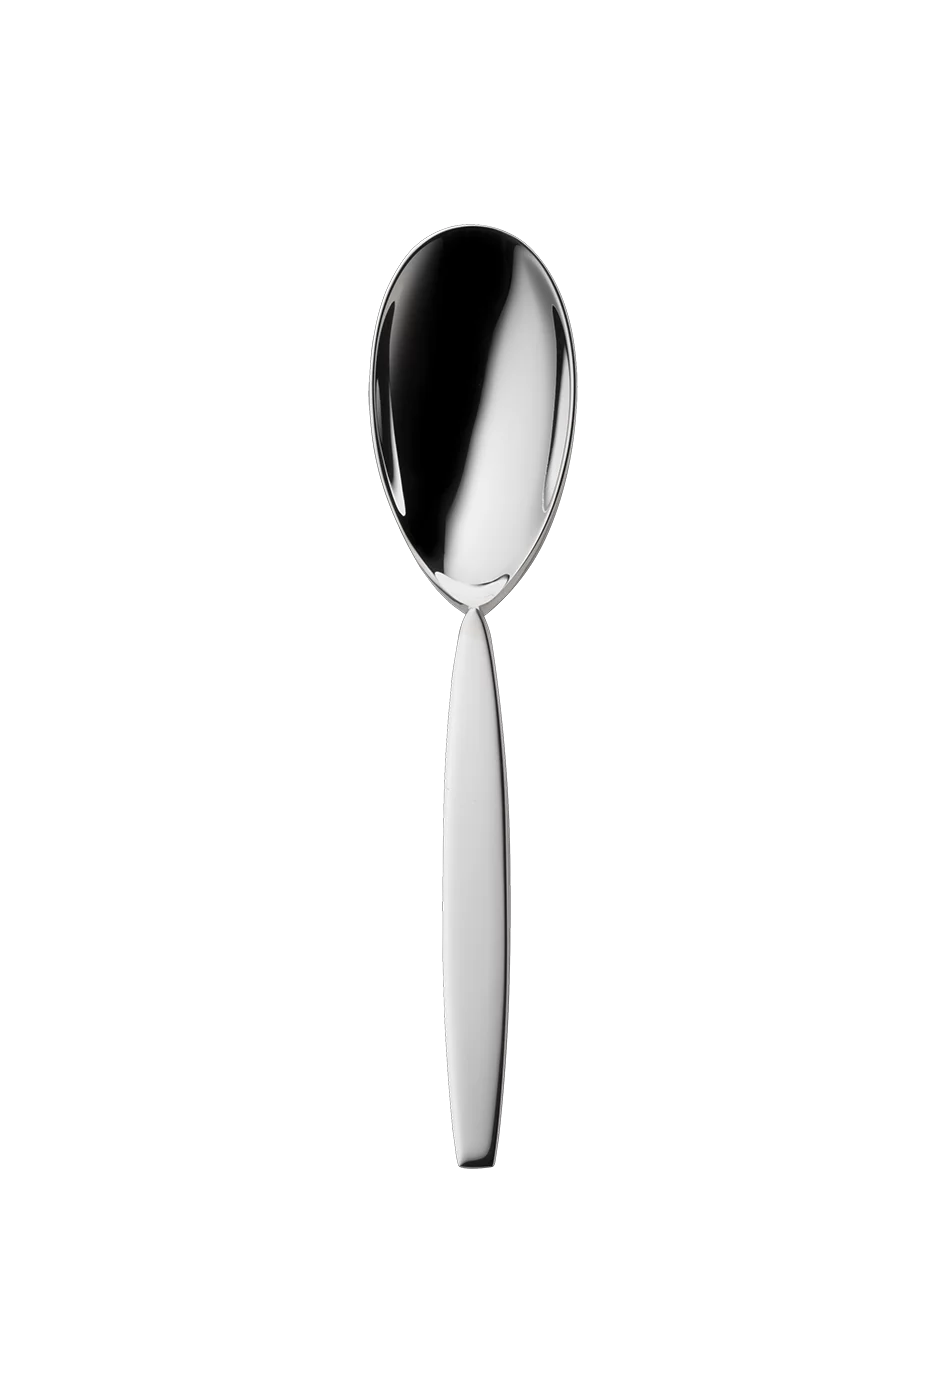 12" Sugar Spoon (150g massive silverplated)